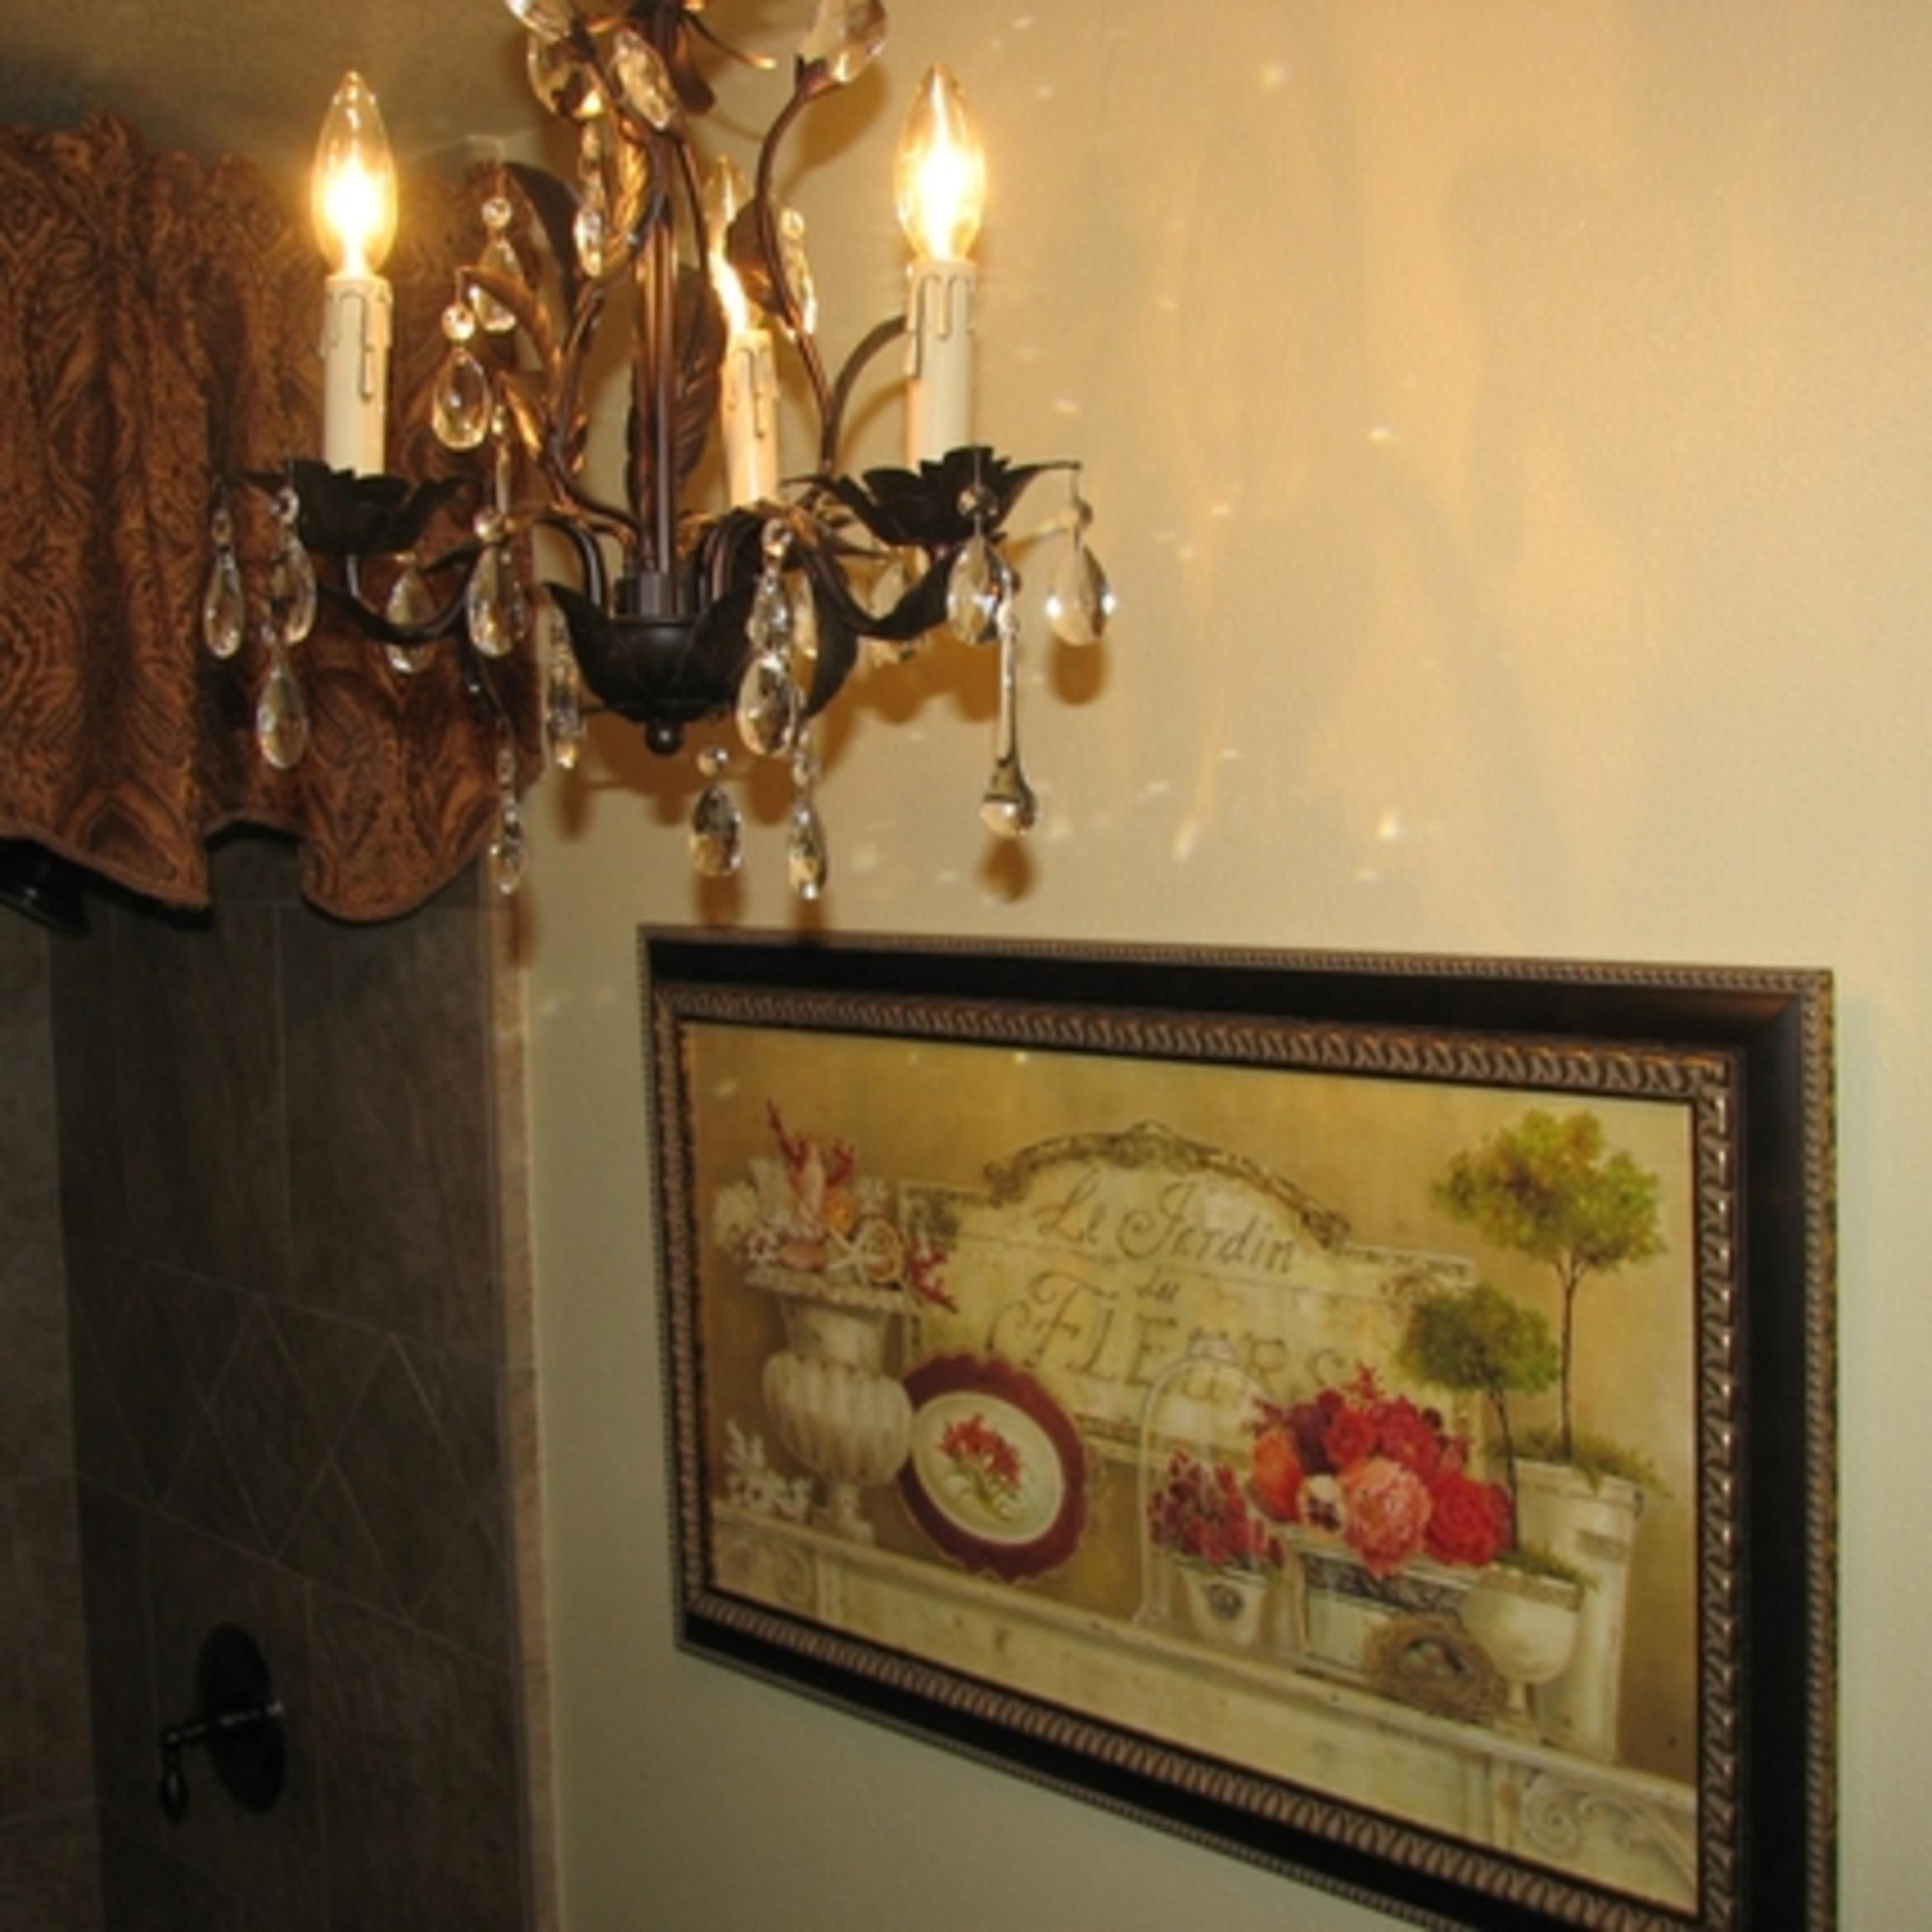 New chandelier and framed art